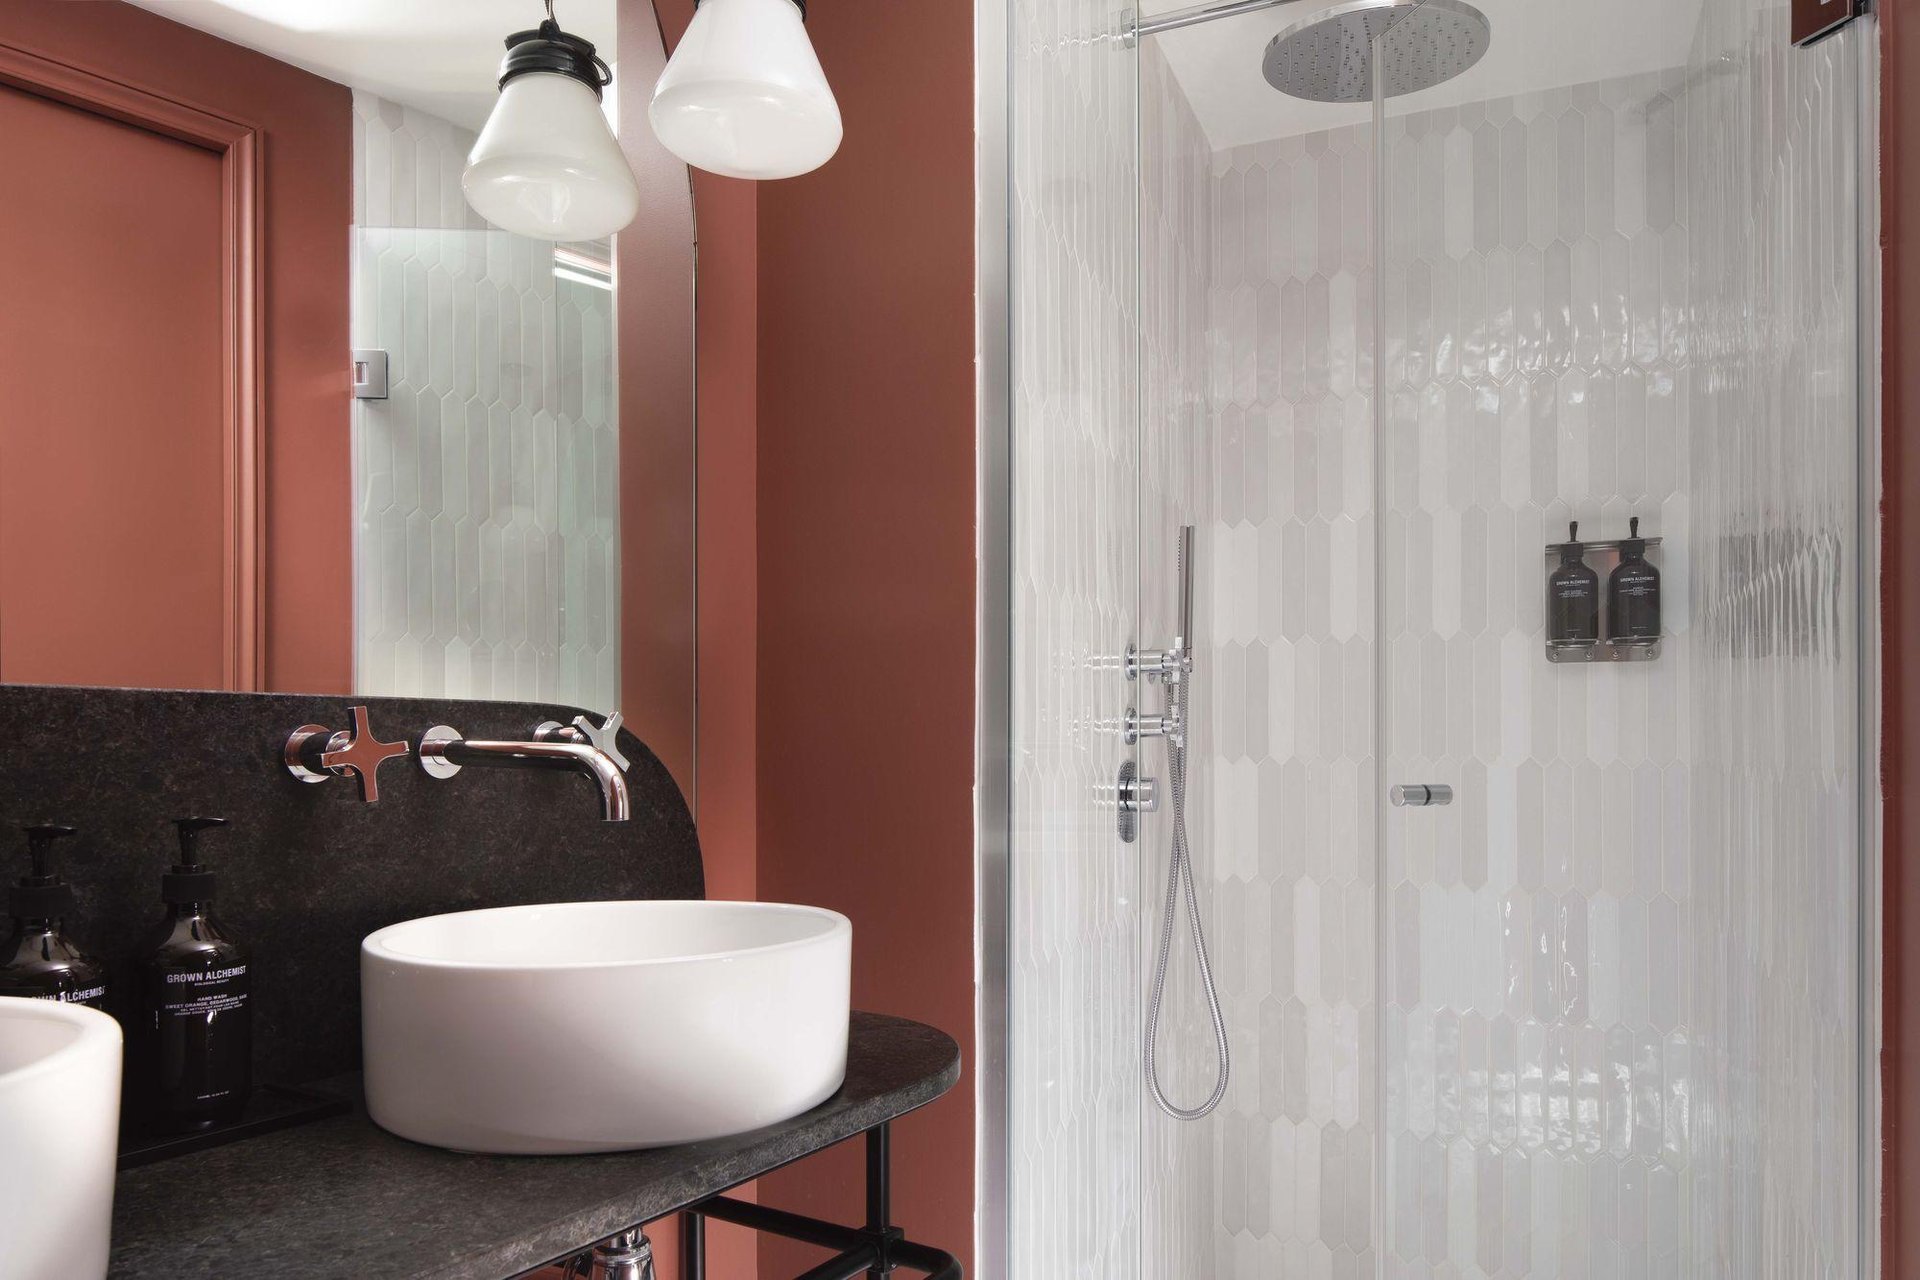 Hotel Gramont Paris Opera, Bathroom with large shower